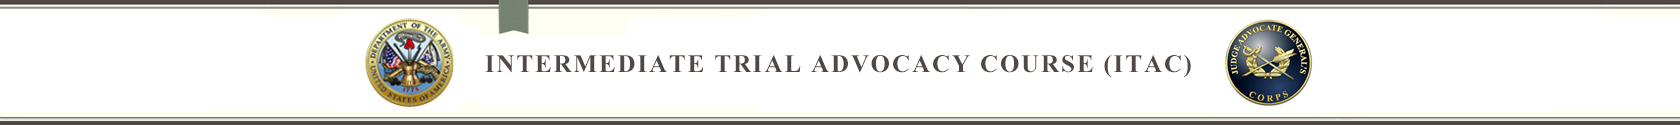 Intermediate Trial Advocacy Course Banner